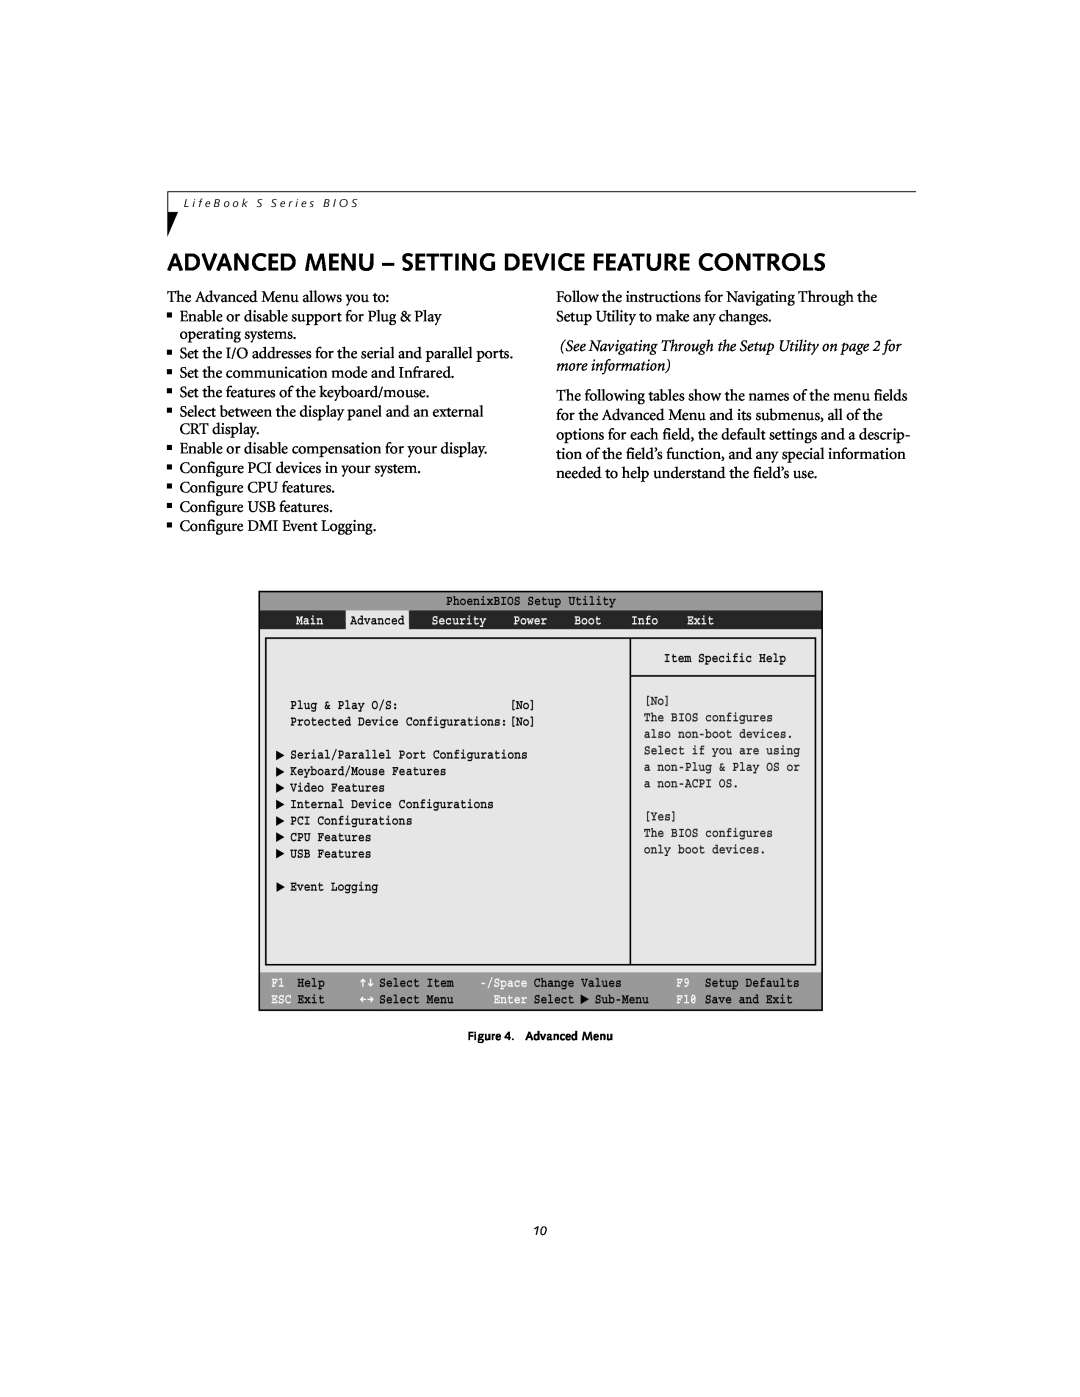 Fujitsu S-5582 manual Advanced Menu - Setting Device Feature Controls 